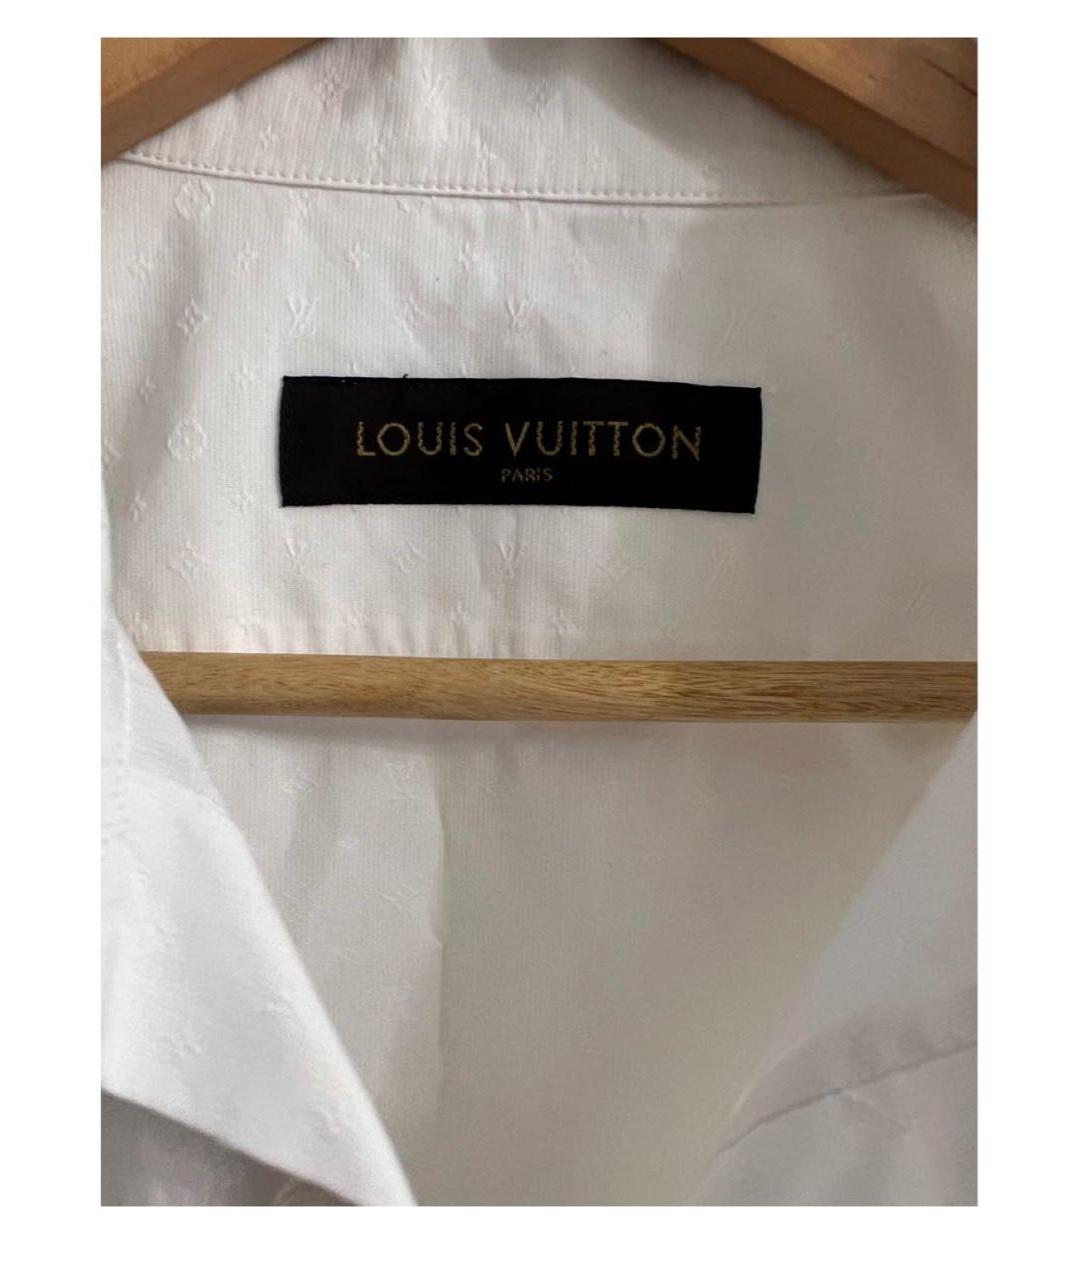 LOUIS VUITTON PRE-OWNED Белая хлопковая классическая рубашка, фото 3